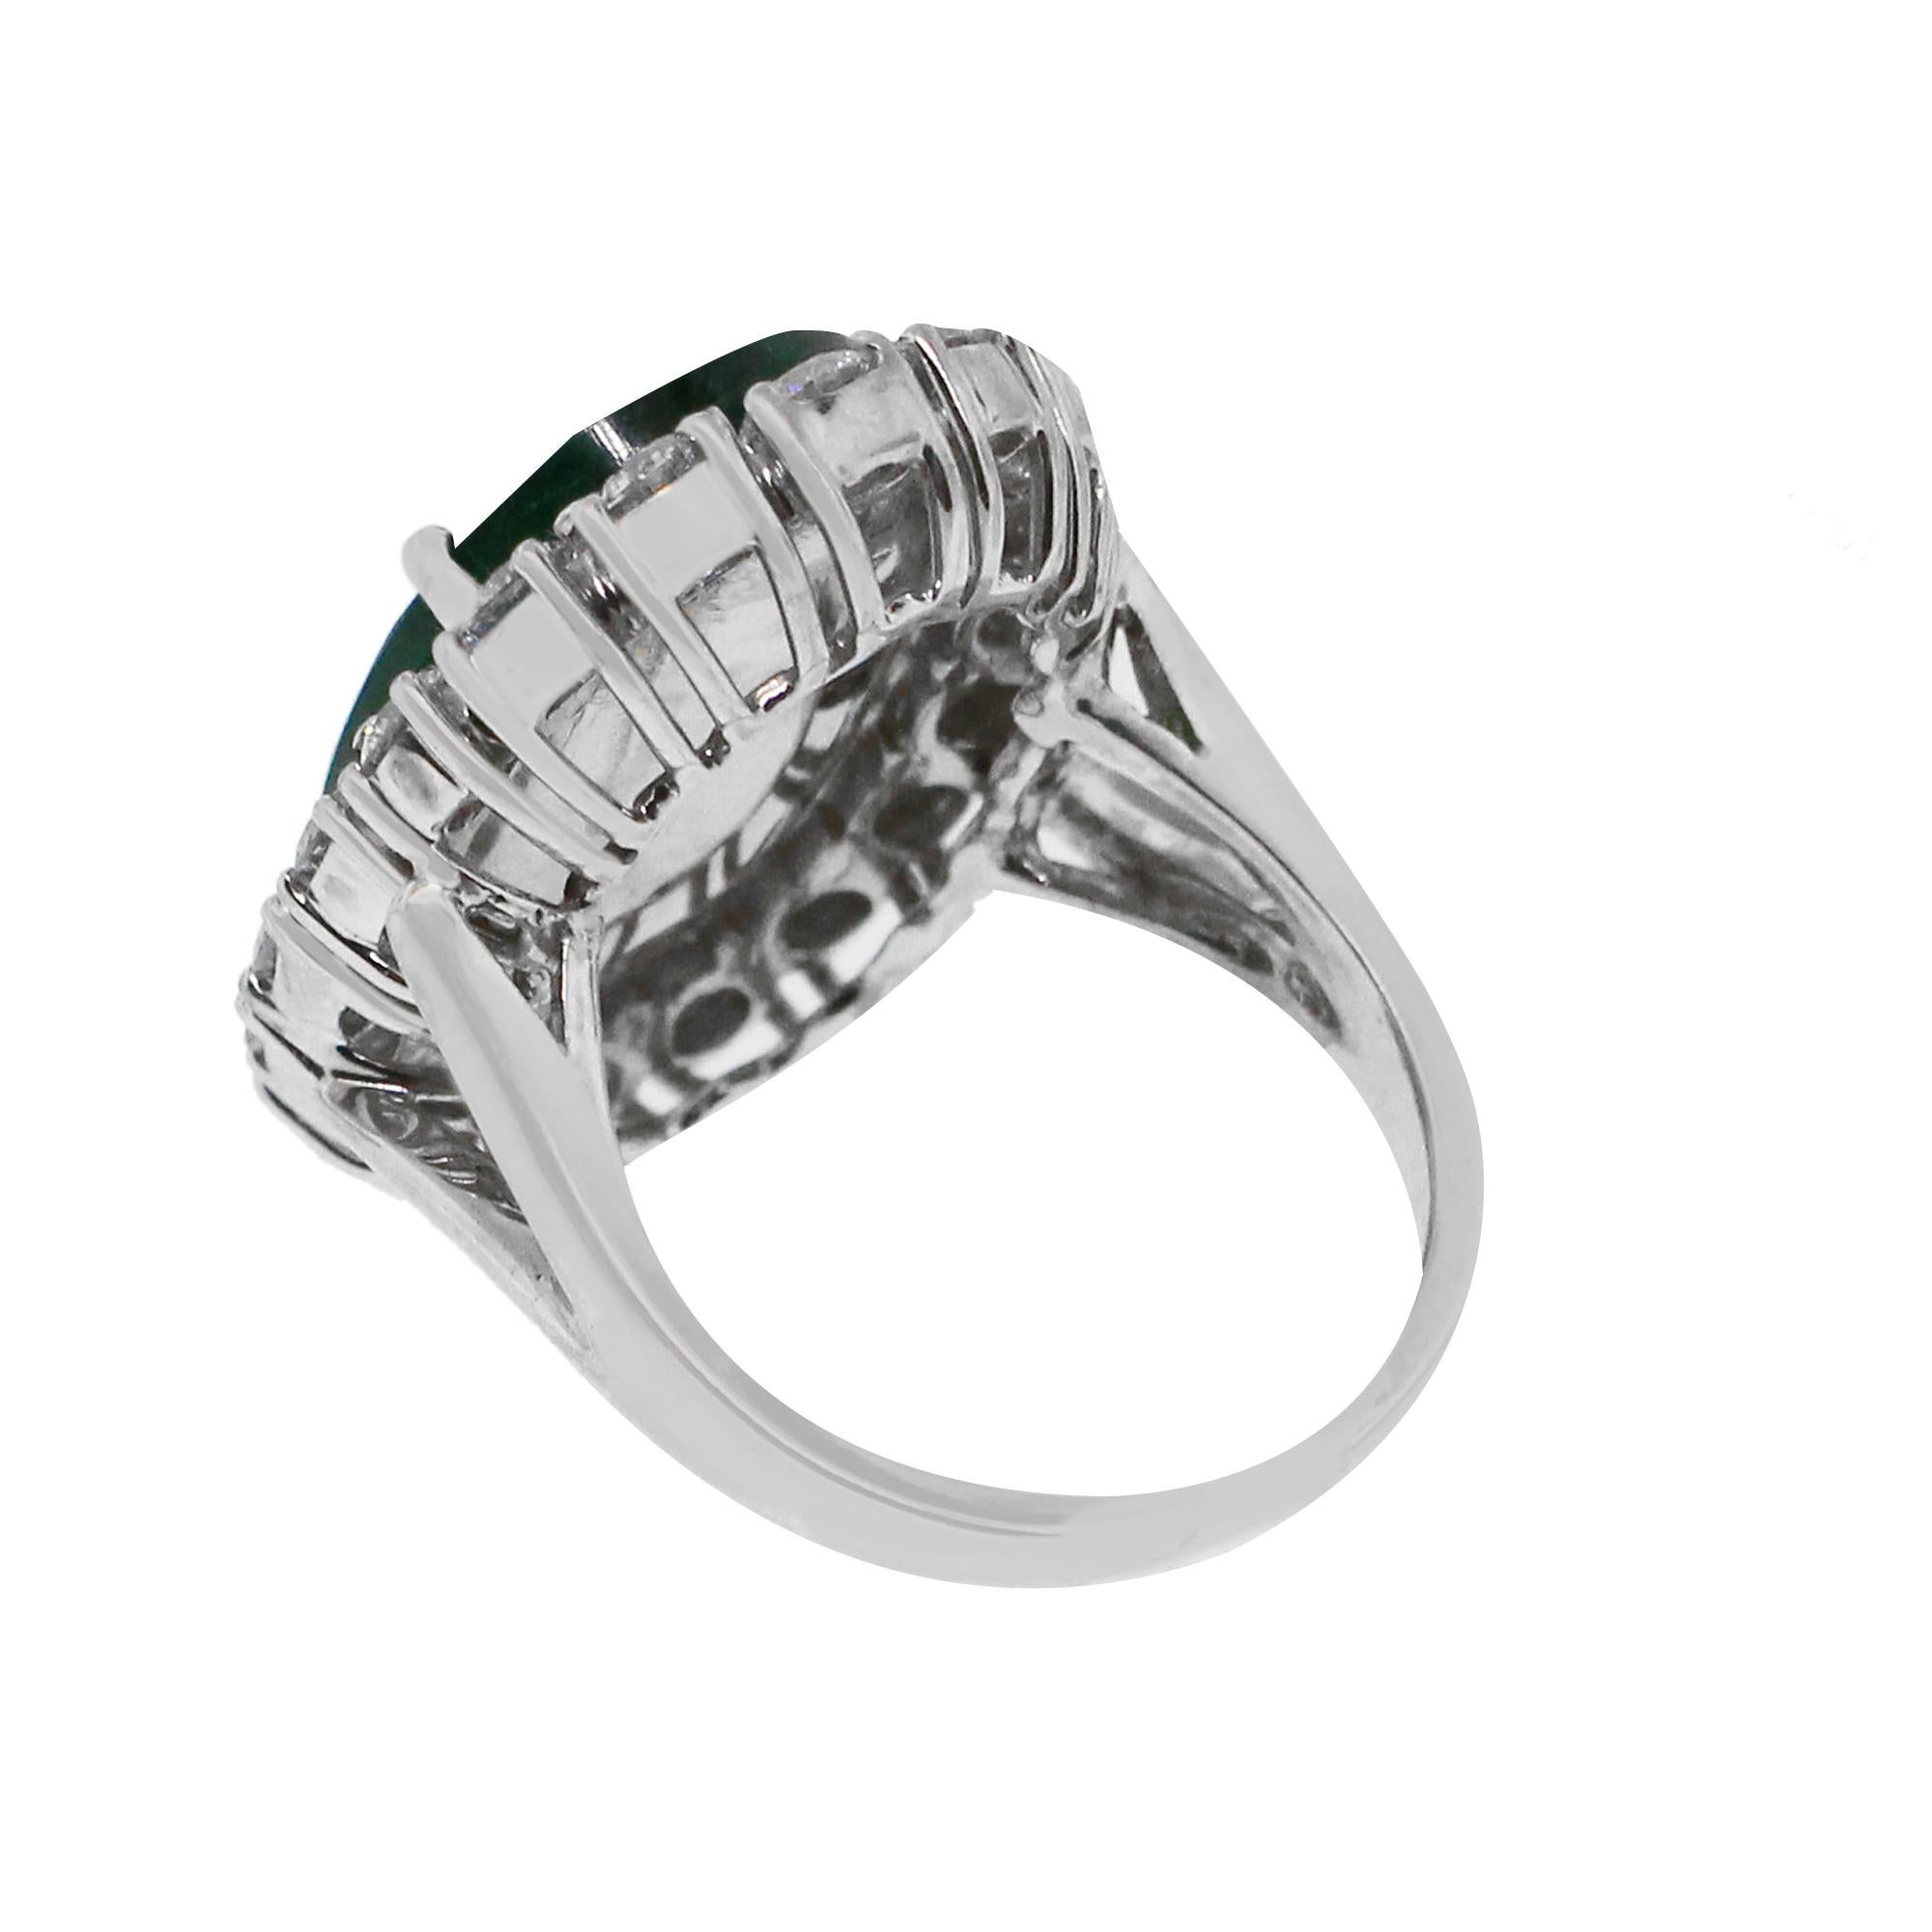 Oval Cut 13.04 Carat Emerald Ring